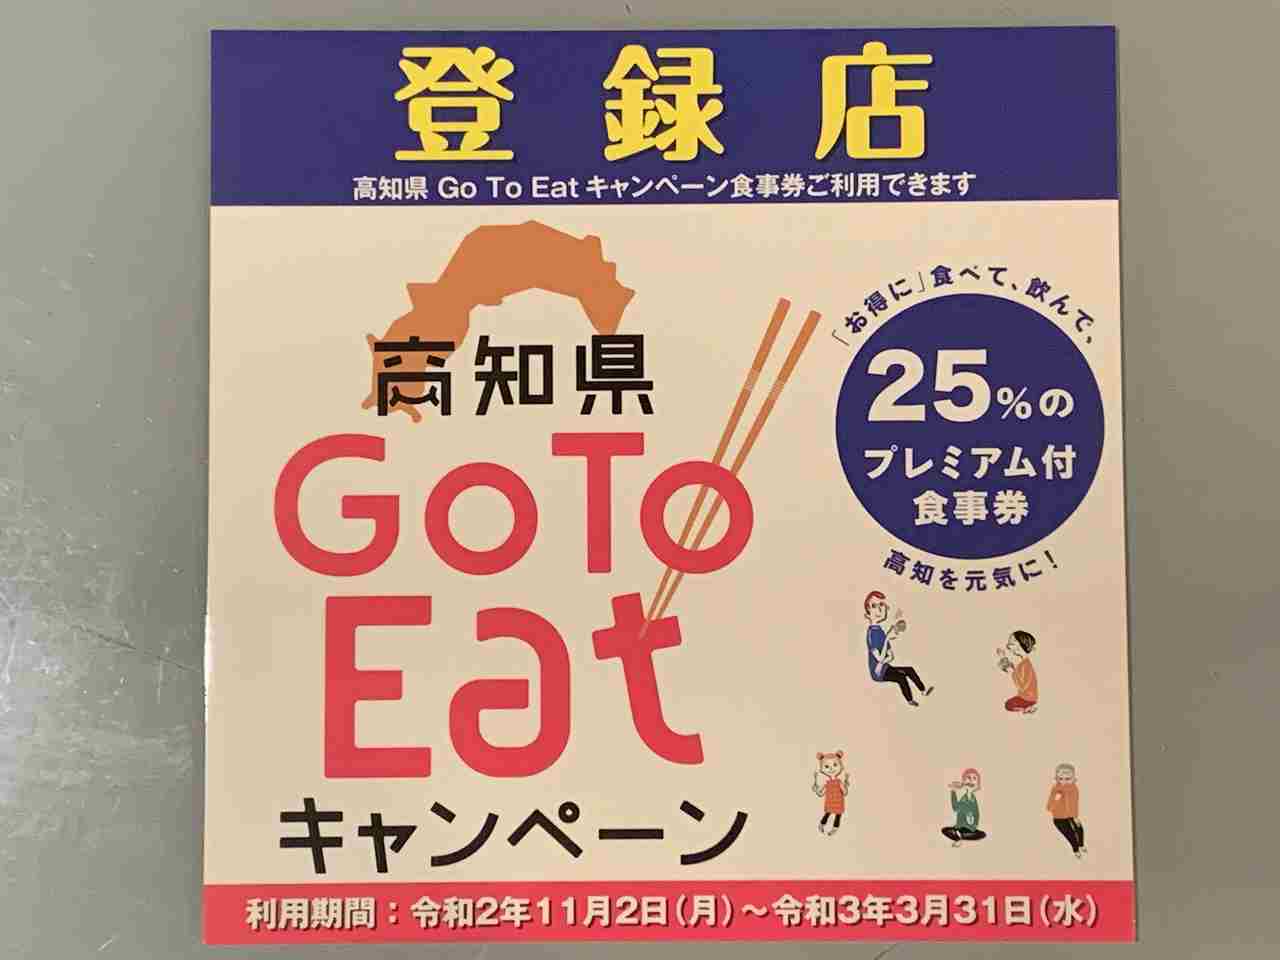 To eat 高知 go